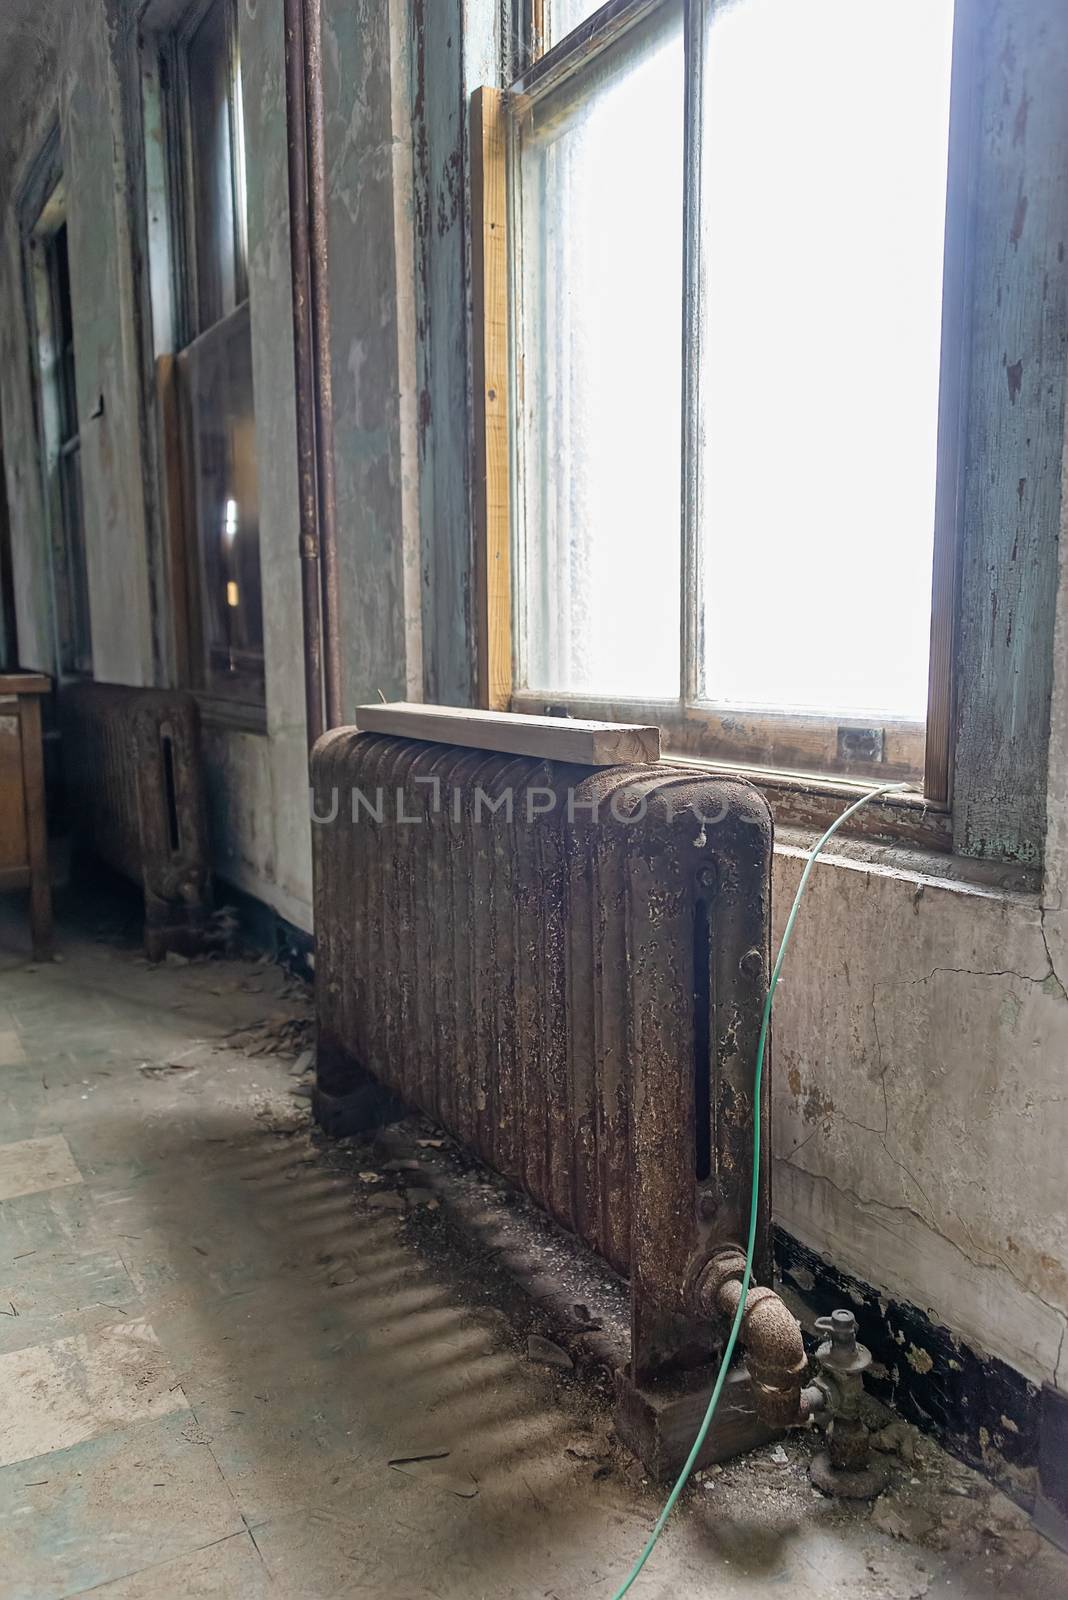 USA, New York, Ellis Island - May 2019: vintage cast iron radiator rusting inside an abandoned hospital ward  